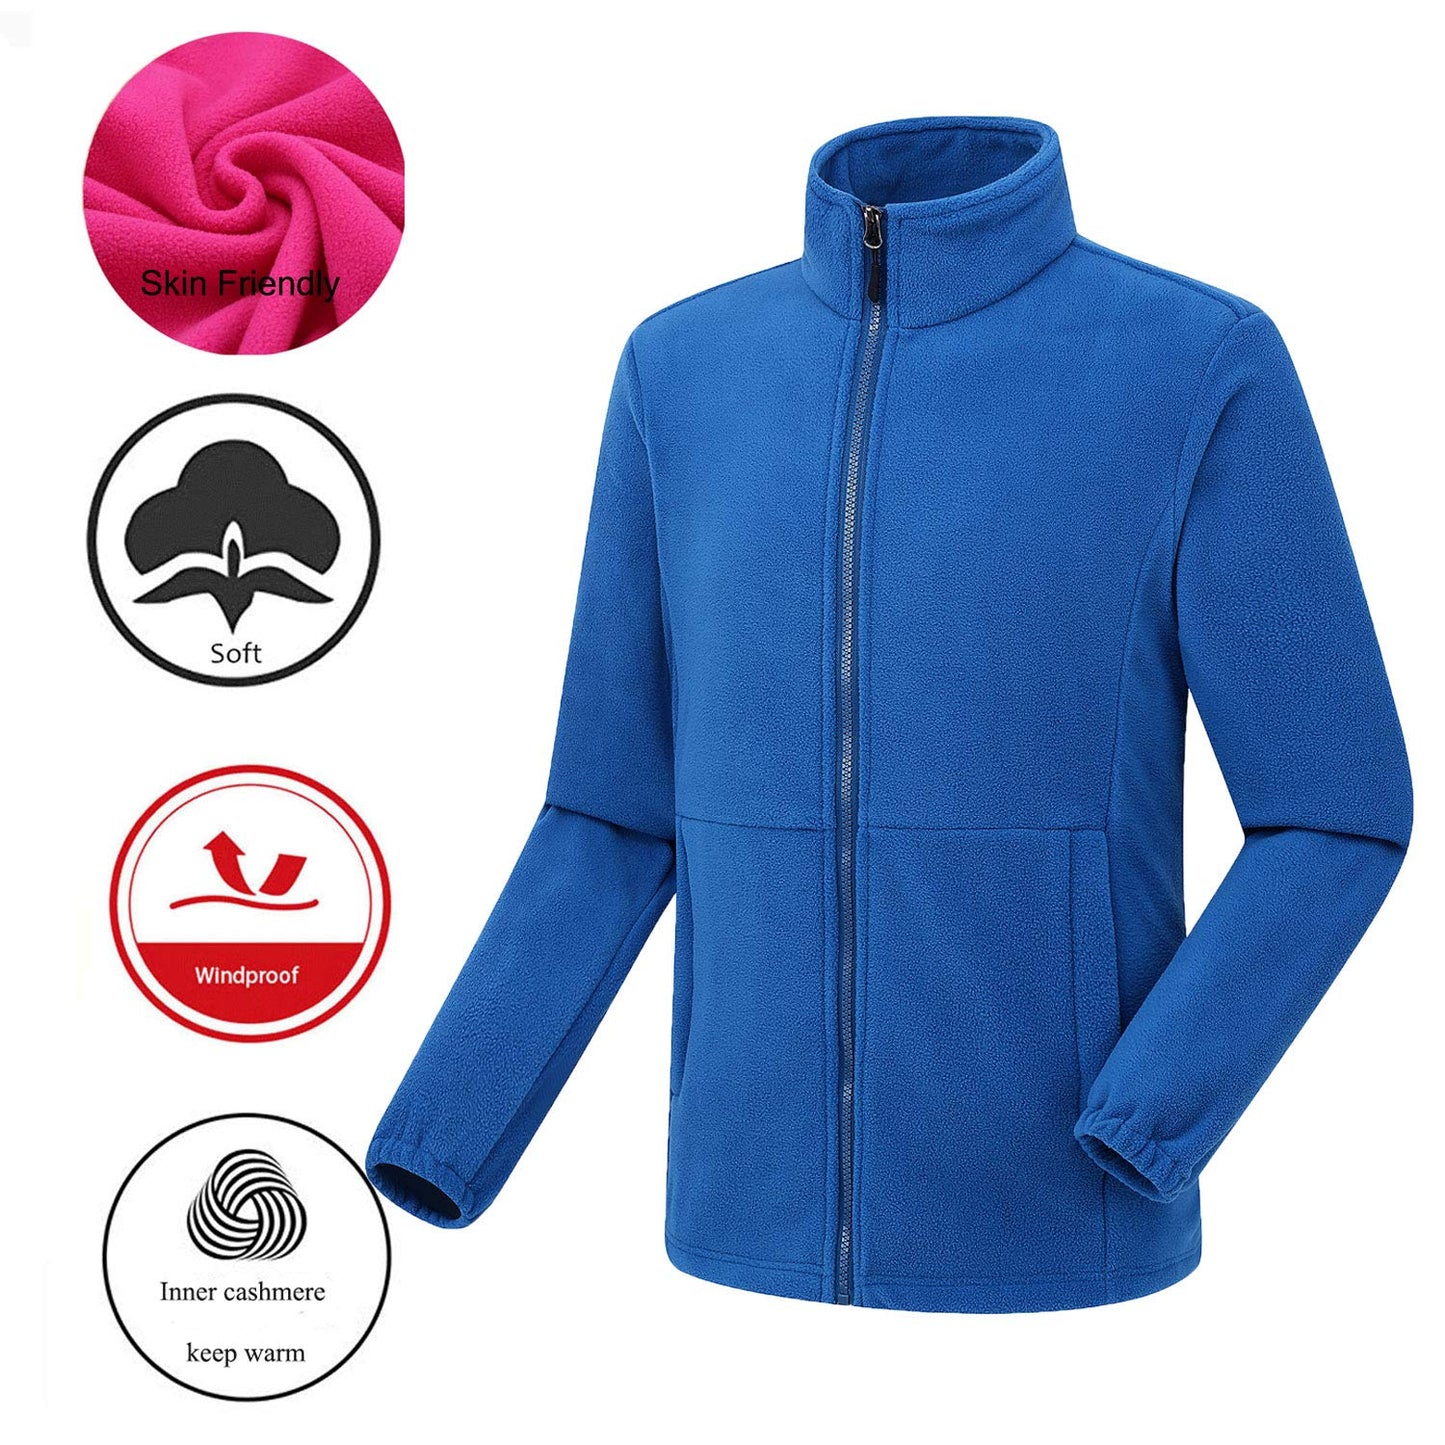 Men Fleece Jackets Full Zip Warm Winter Outdoor Coat Male Hiking Walking Stand Collar Jacket for Sport Camping Skiing LANBAOSI